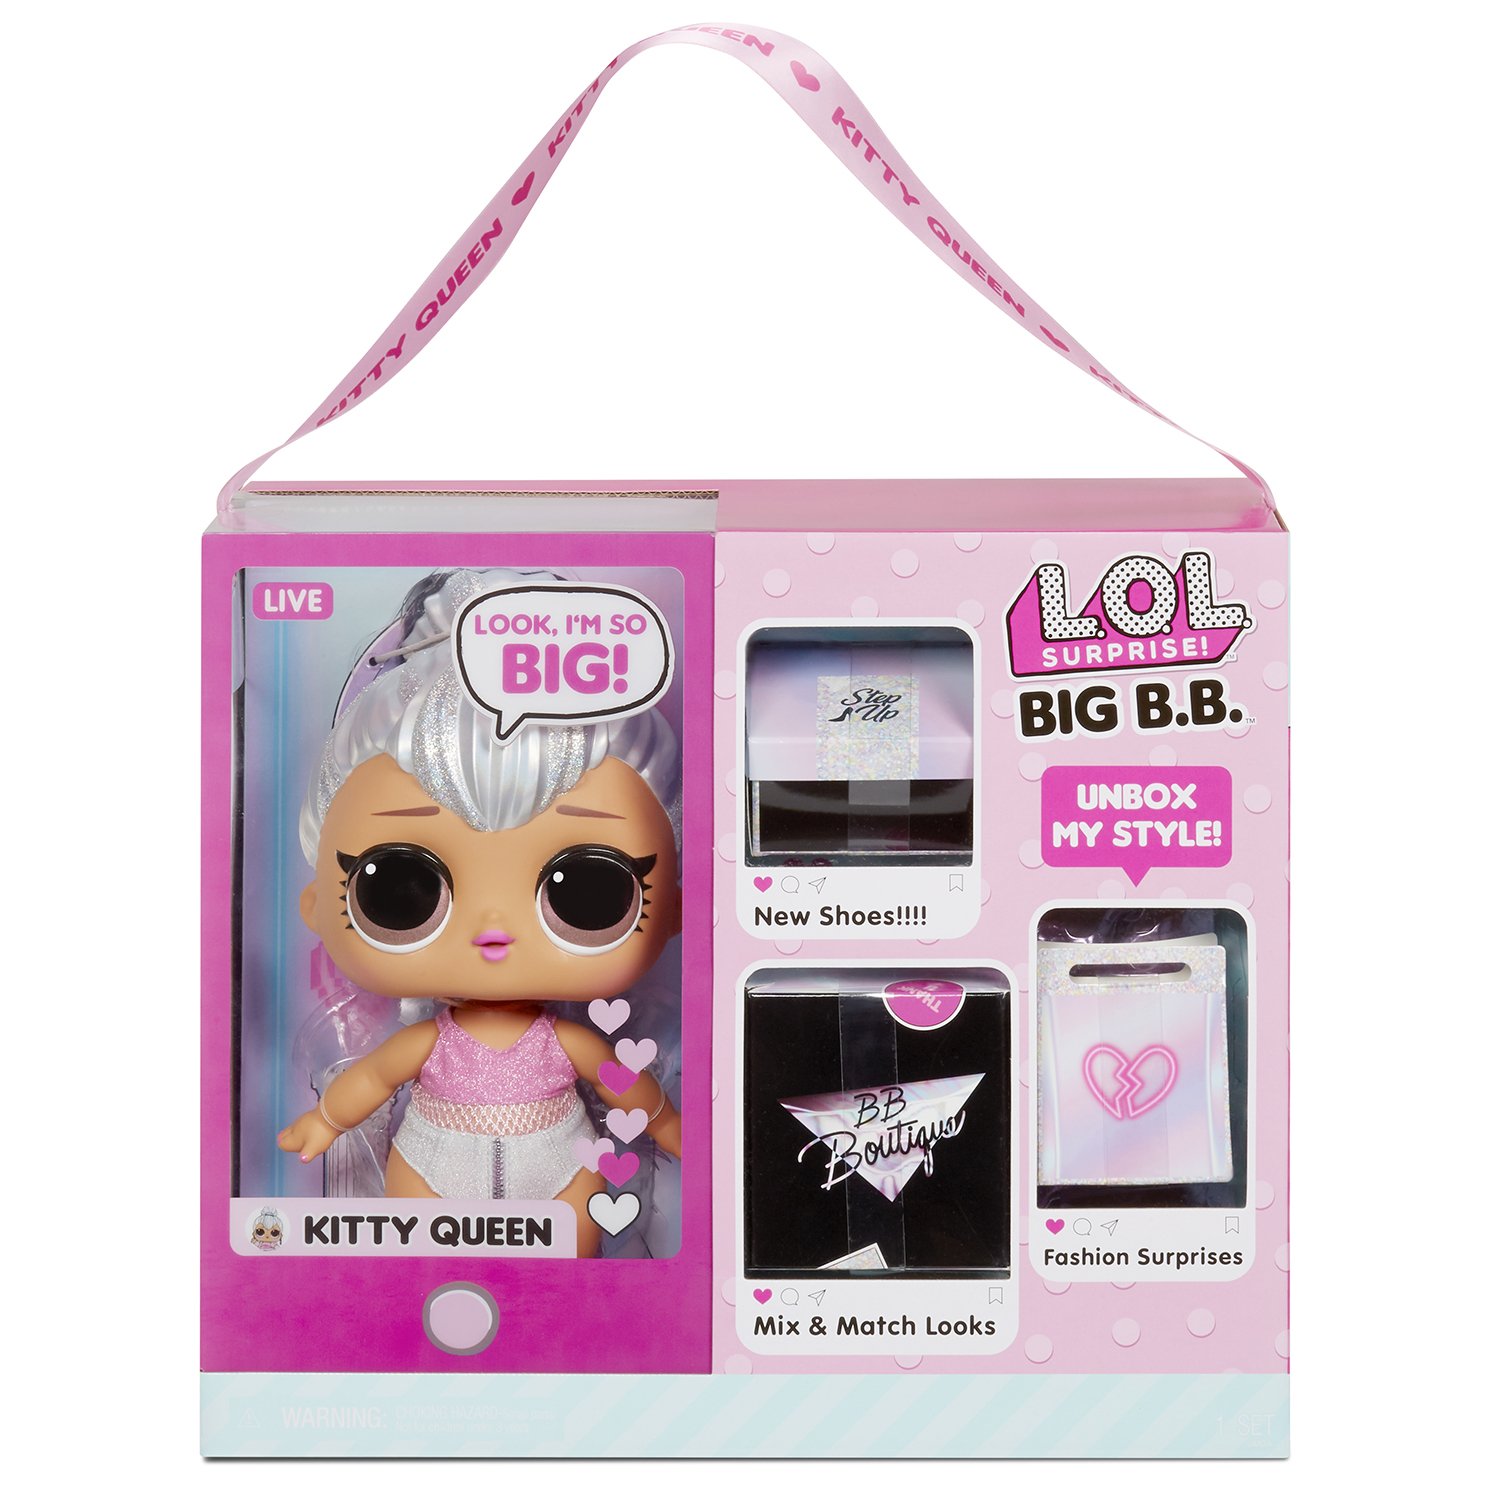  Кукла L.O.L. Surprise! Big B.B. Kitty Queen - Кукла Биг БиБи Лил малышка Китти Квин